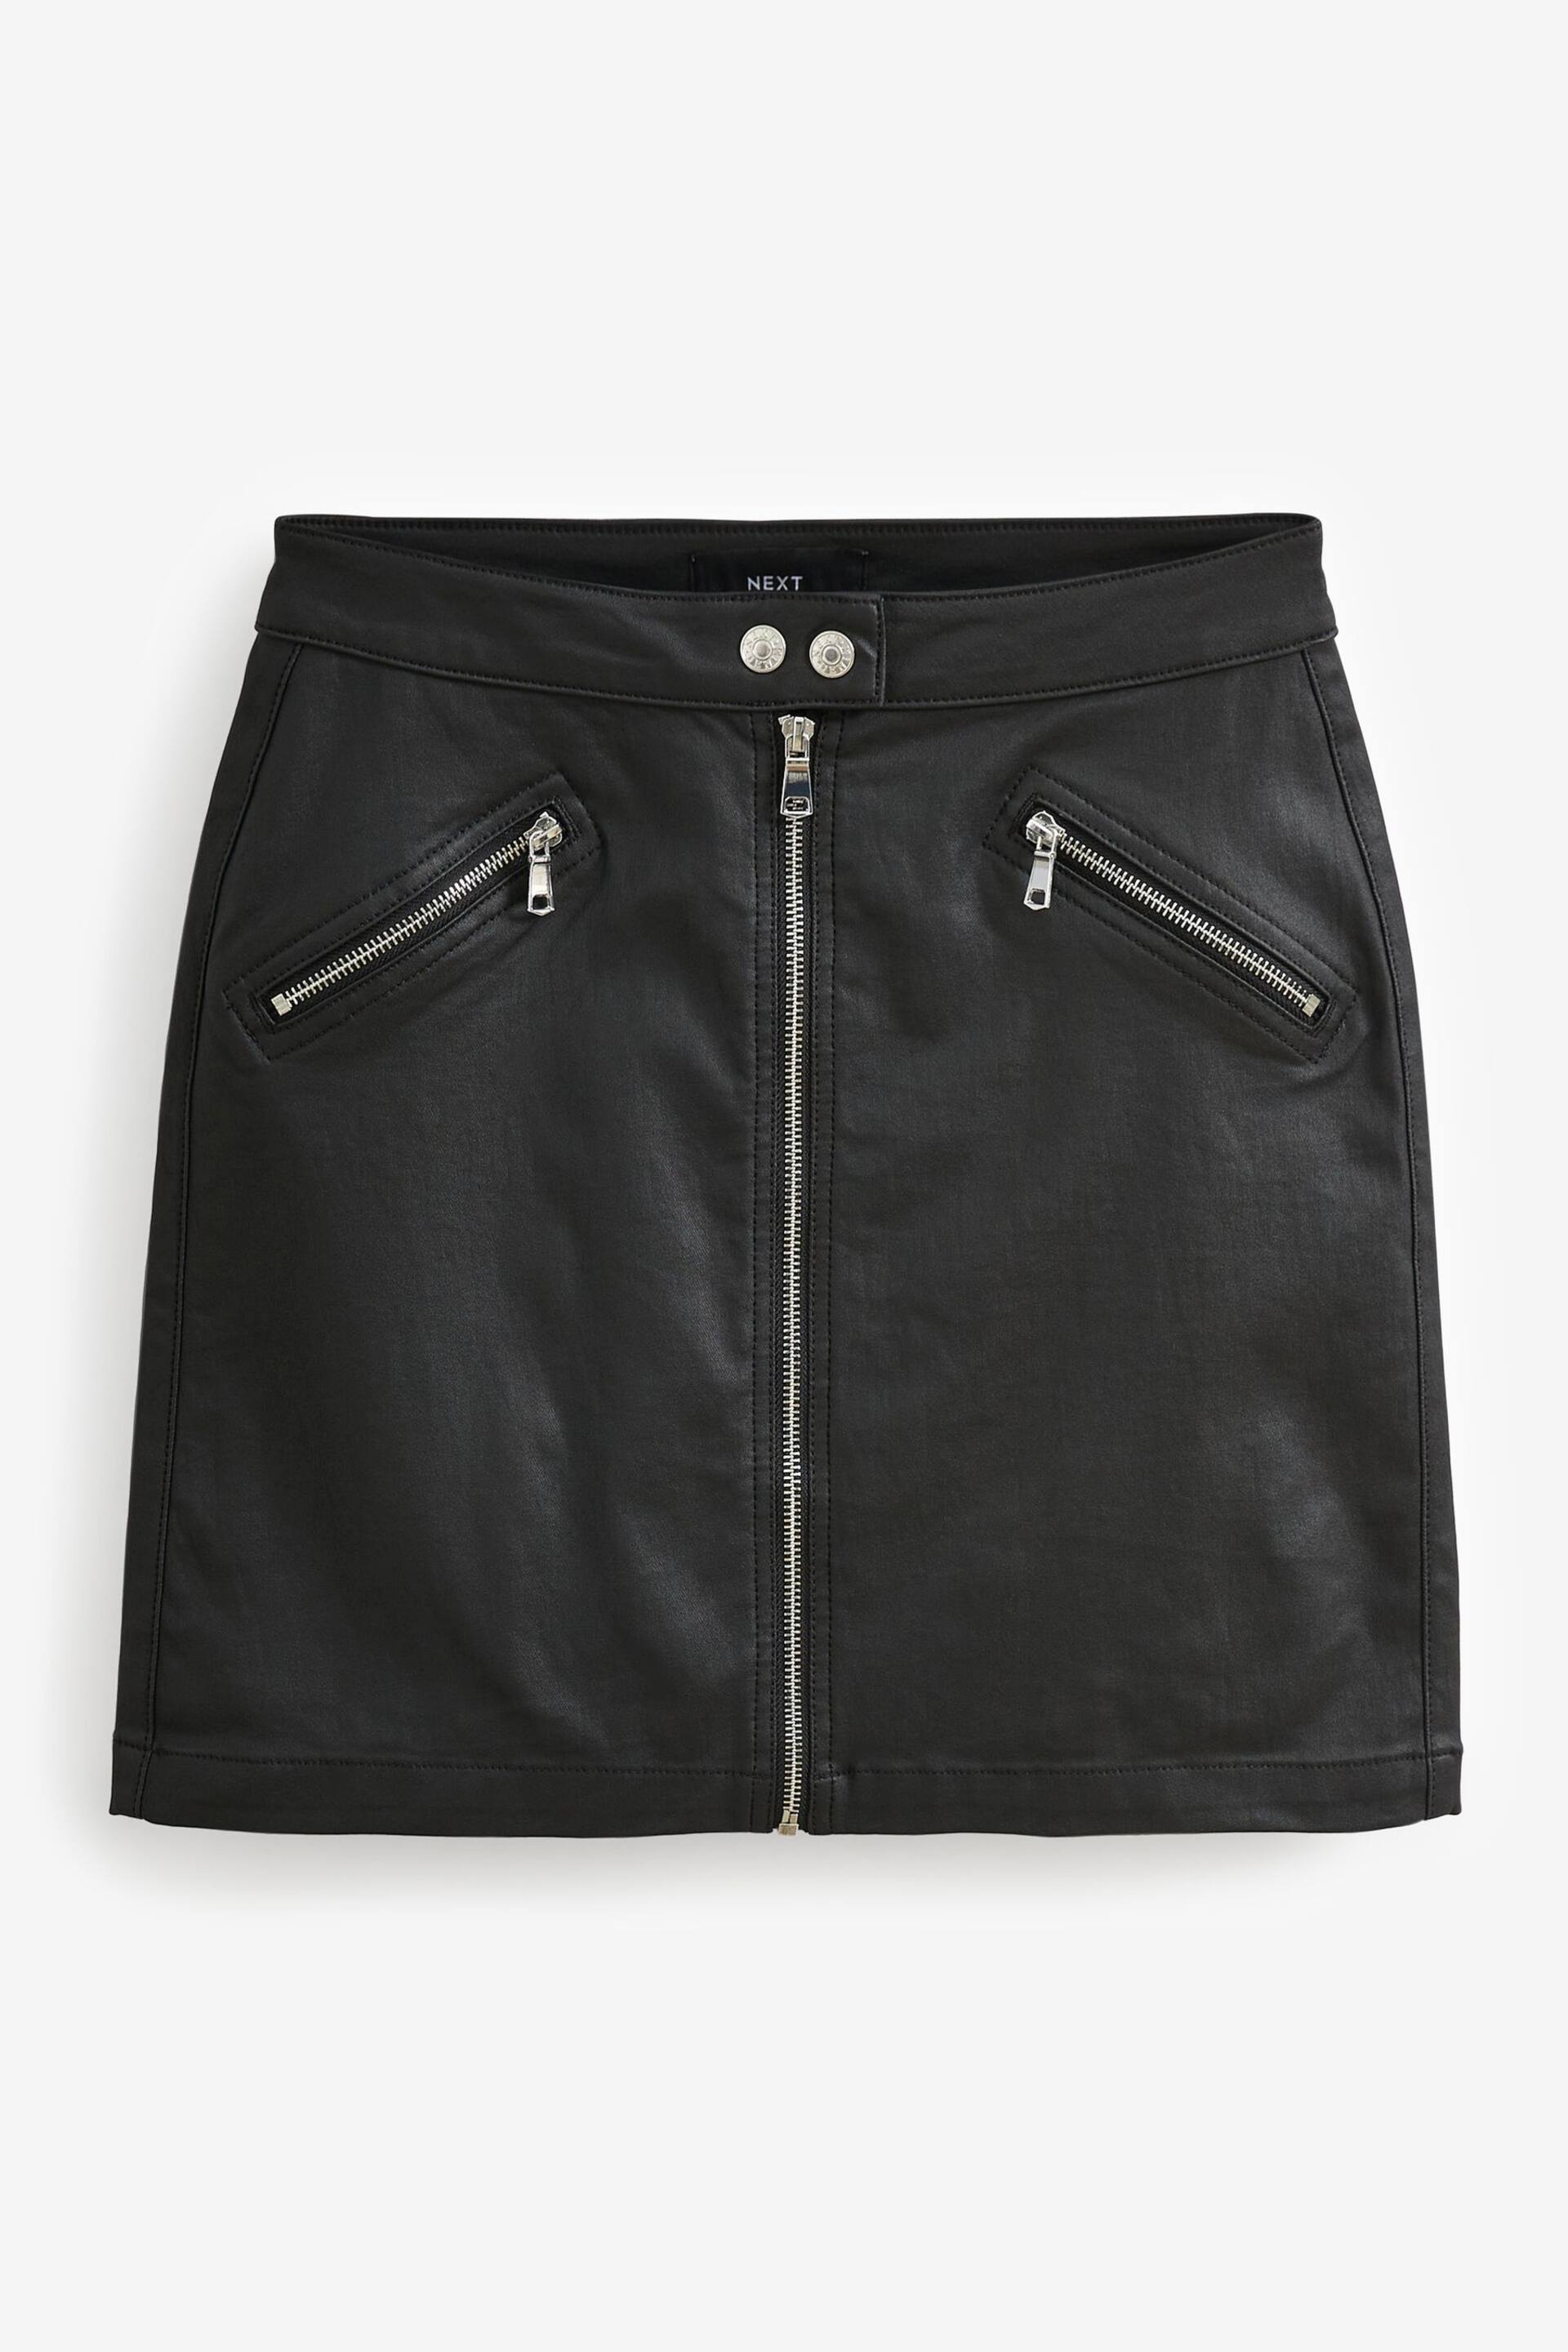 Black Coated Denim Zip Mini Skirt - Image 4 of 5